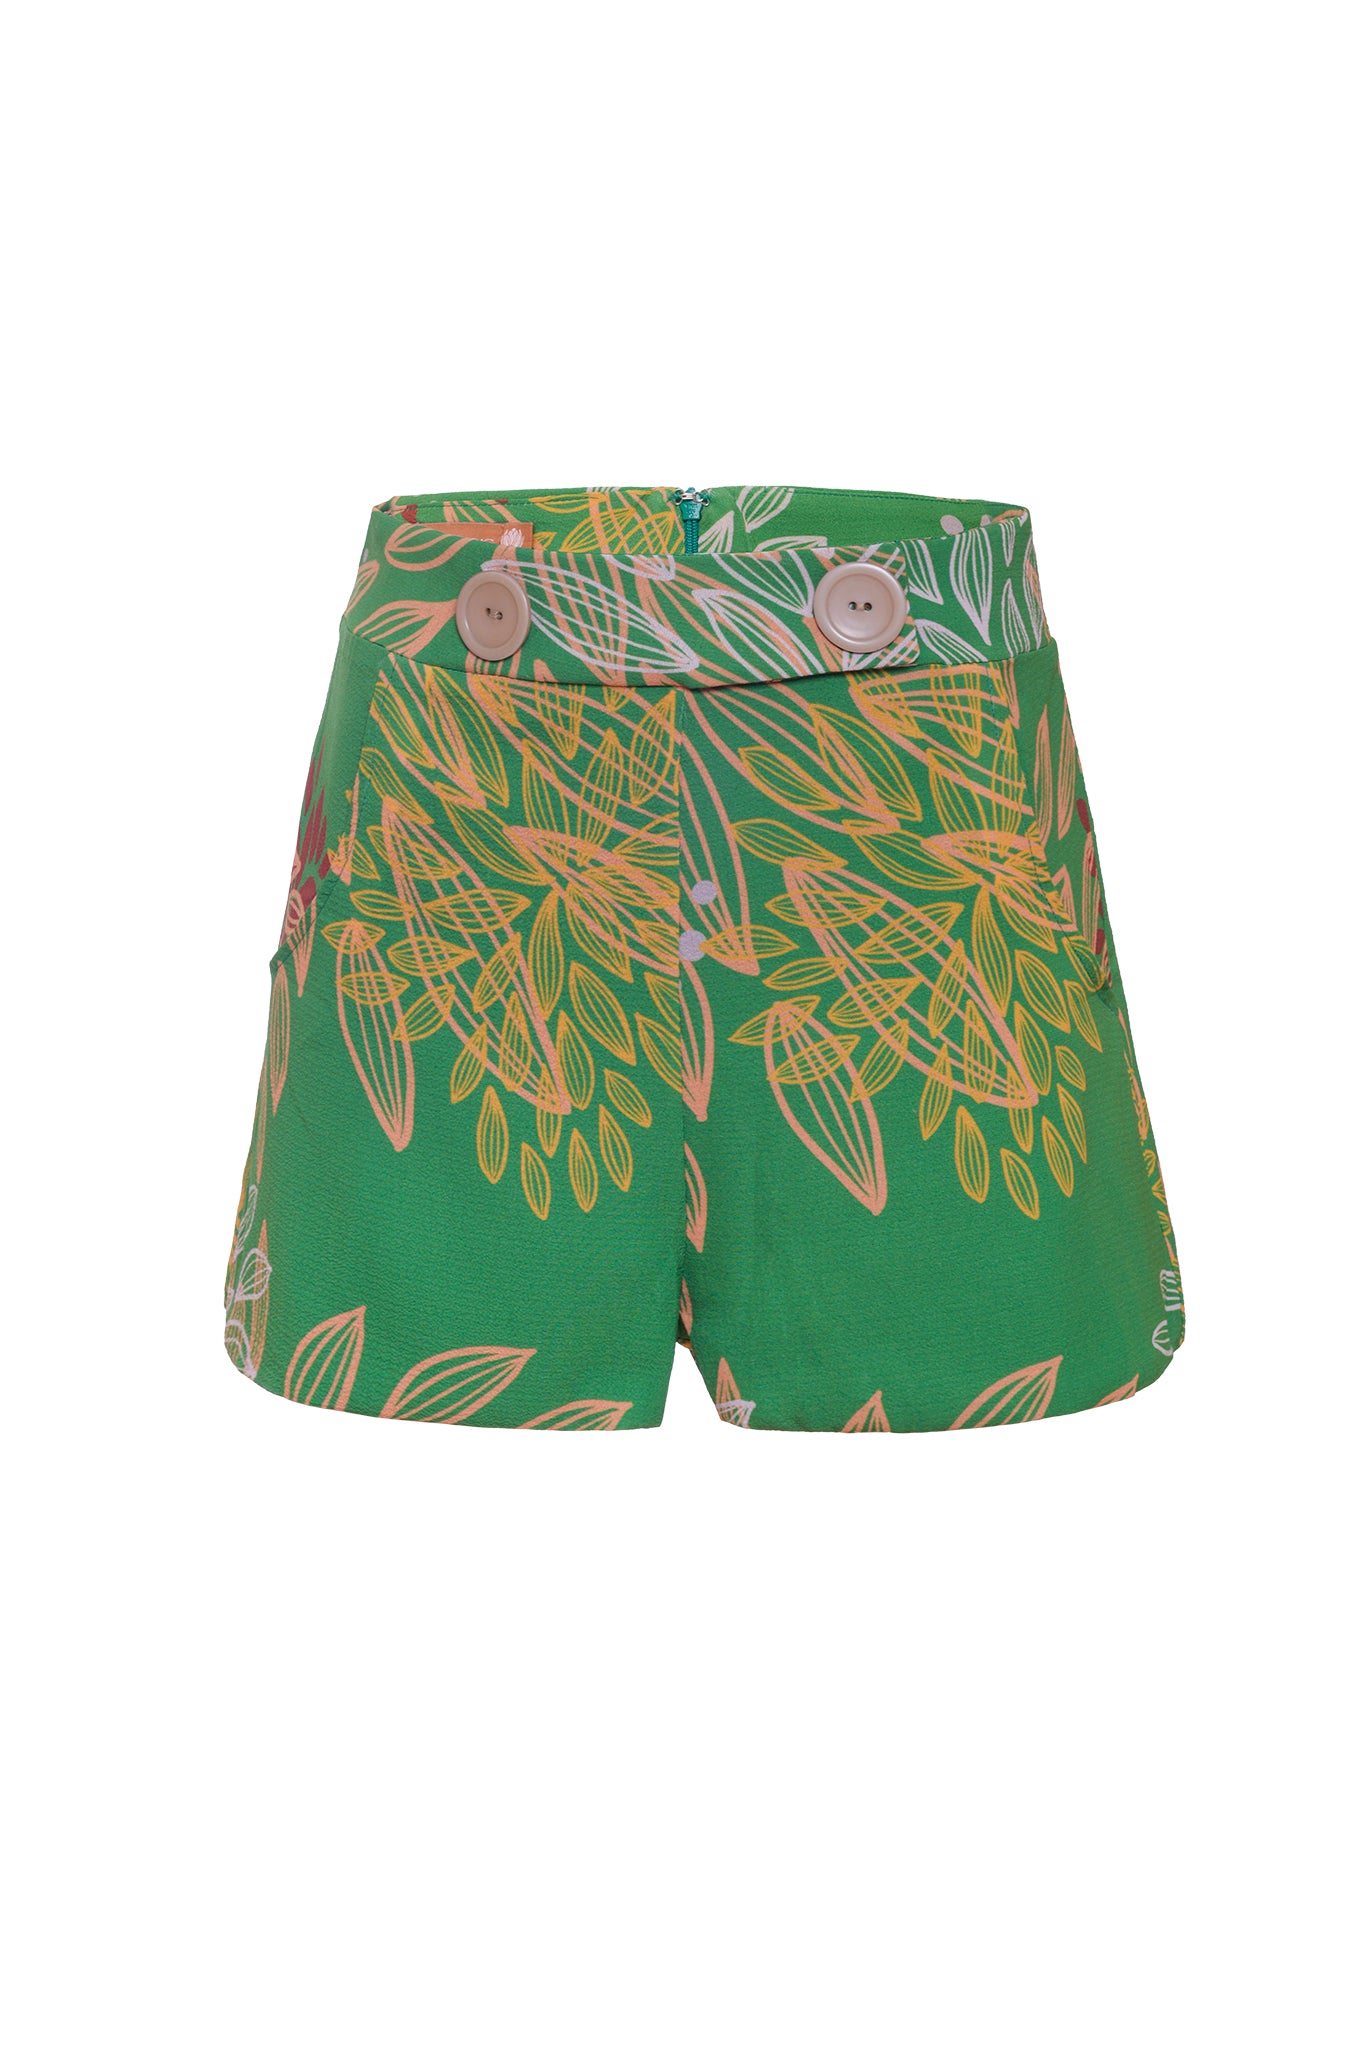 Sandpiper Shorts in Green